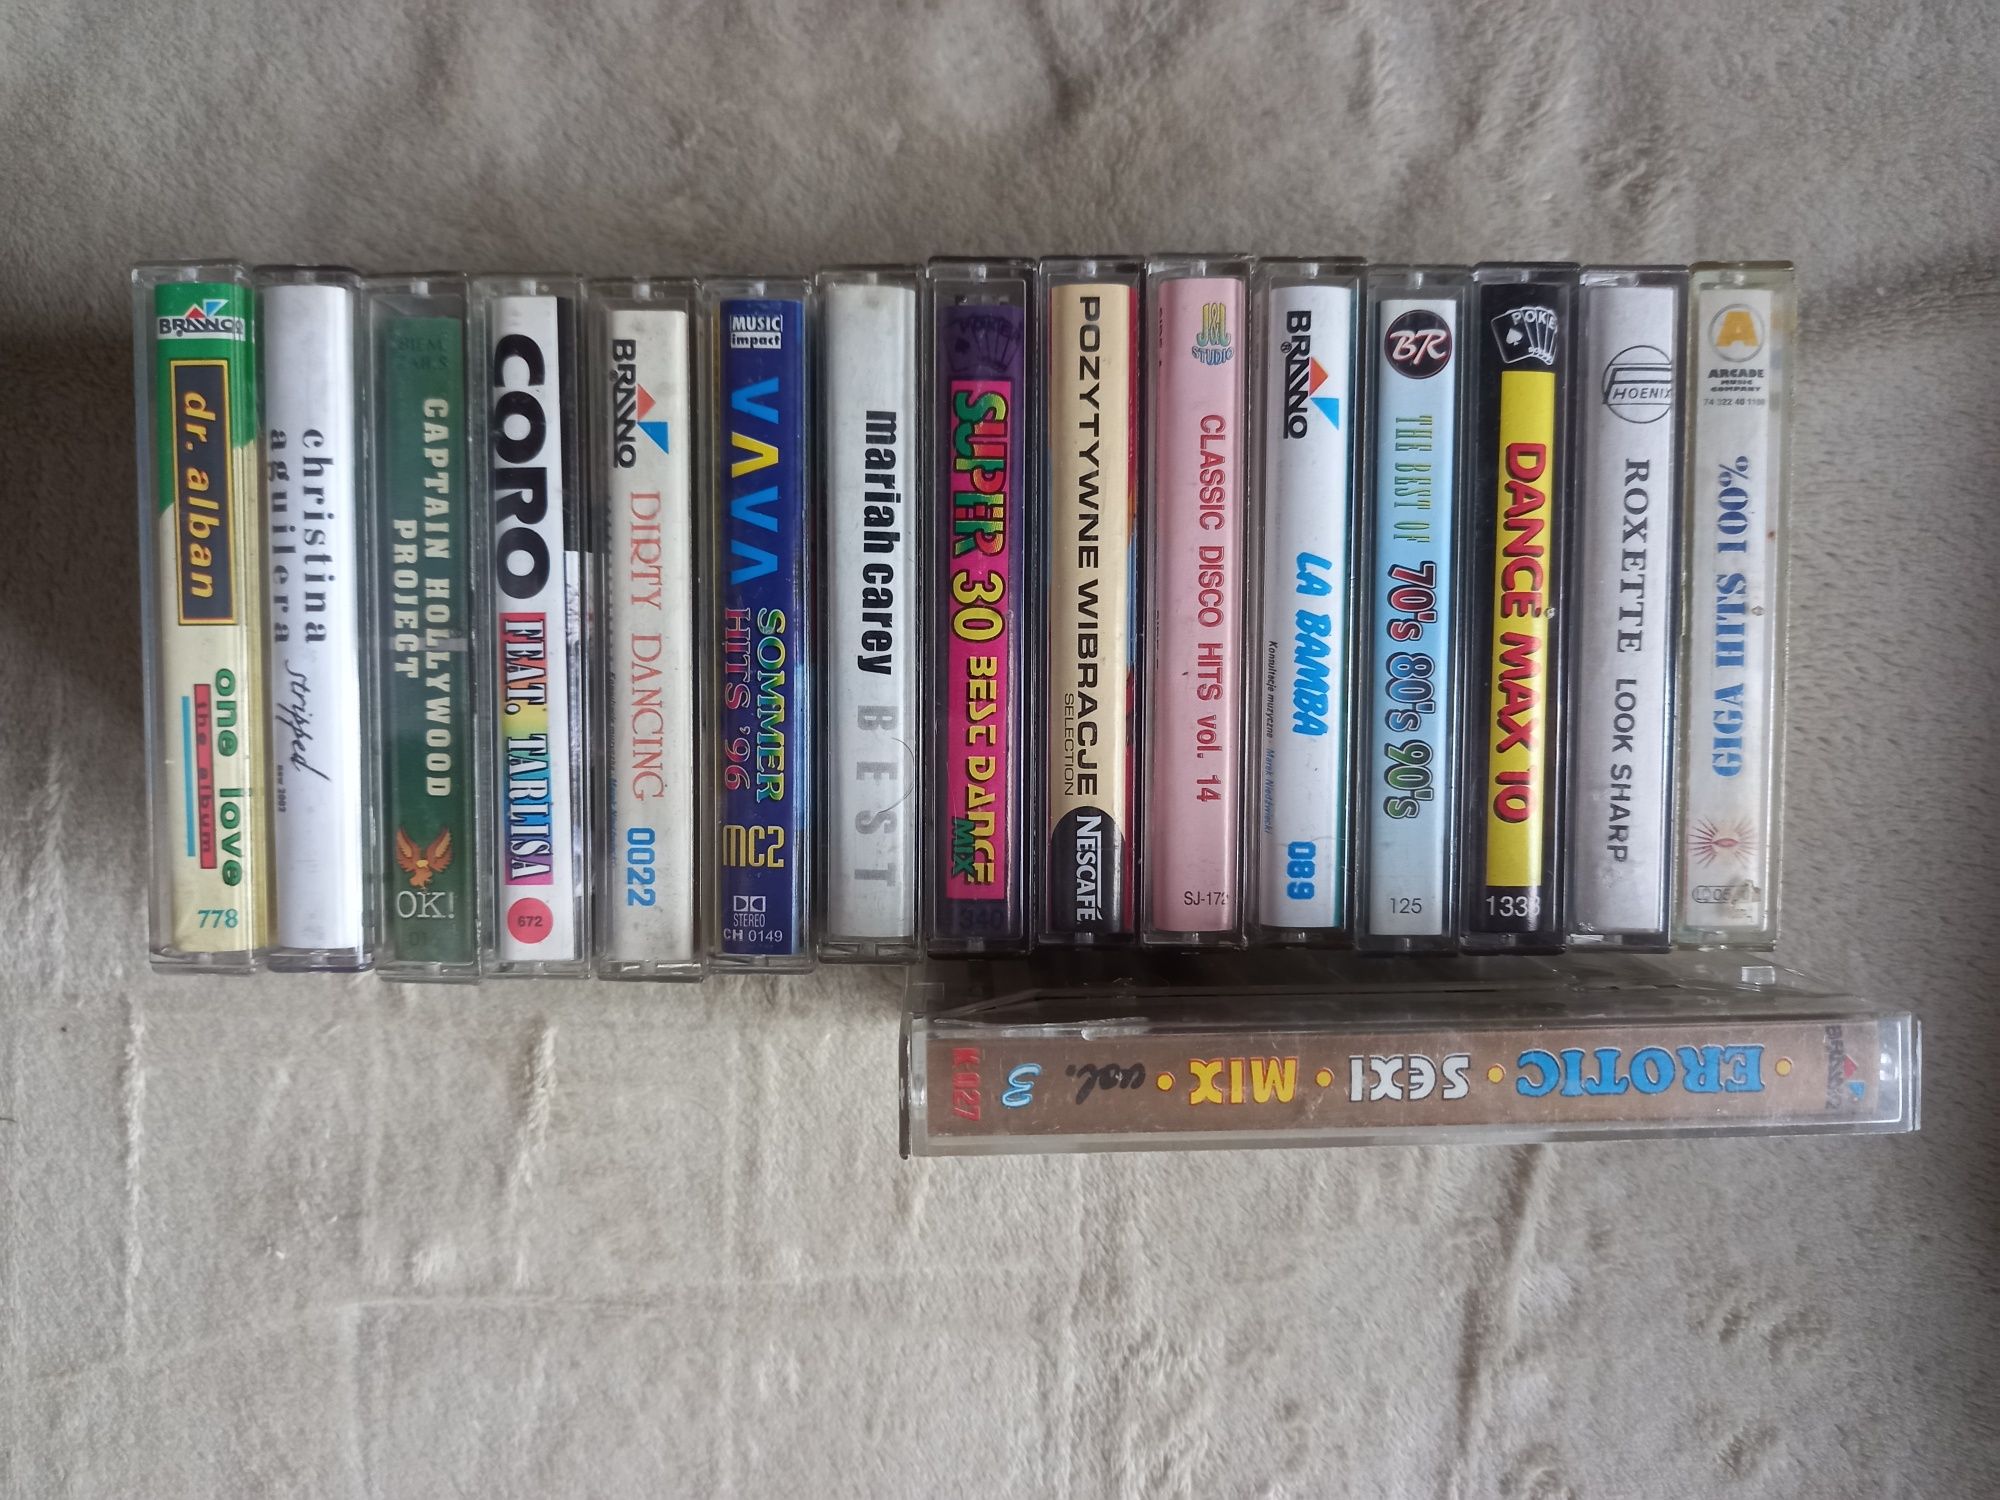 Zestaw 17 kaset disco,dance,italo,latino - składanka lat 80-90